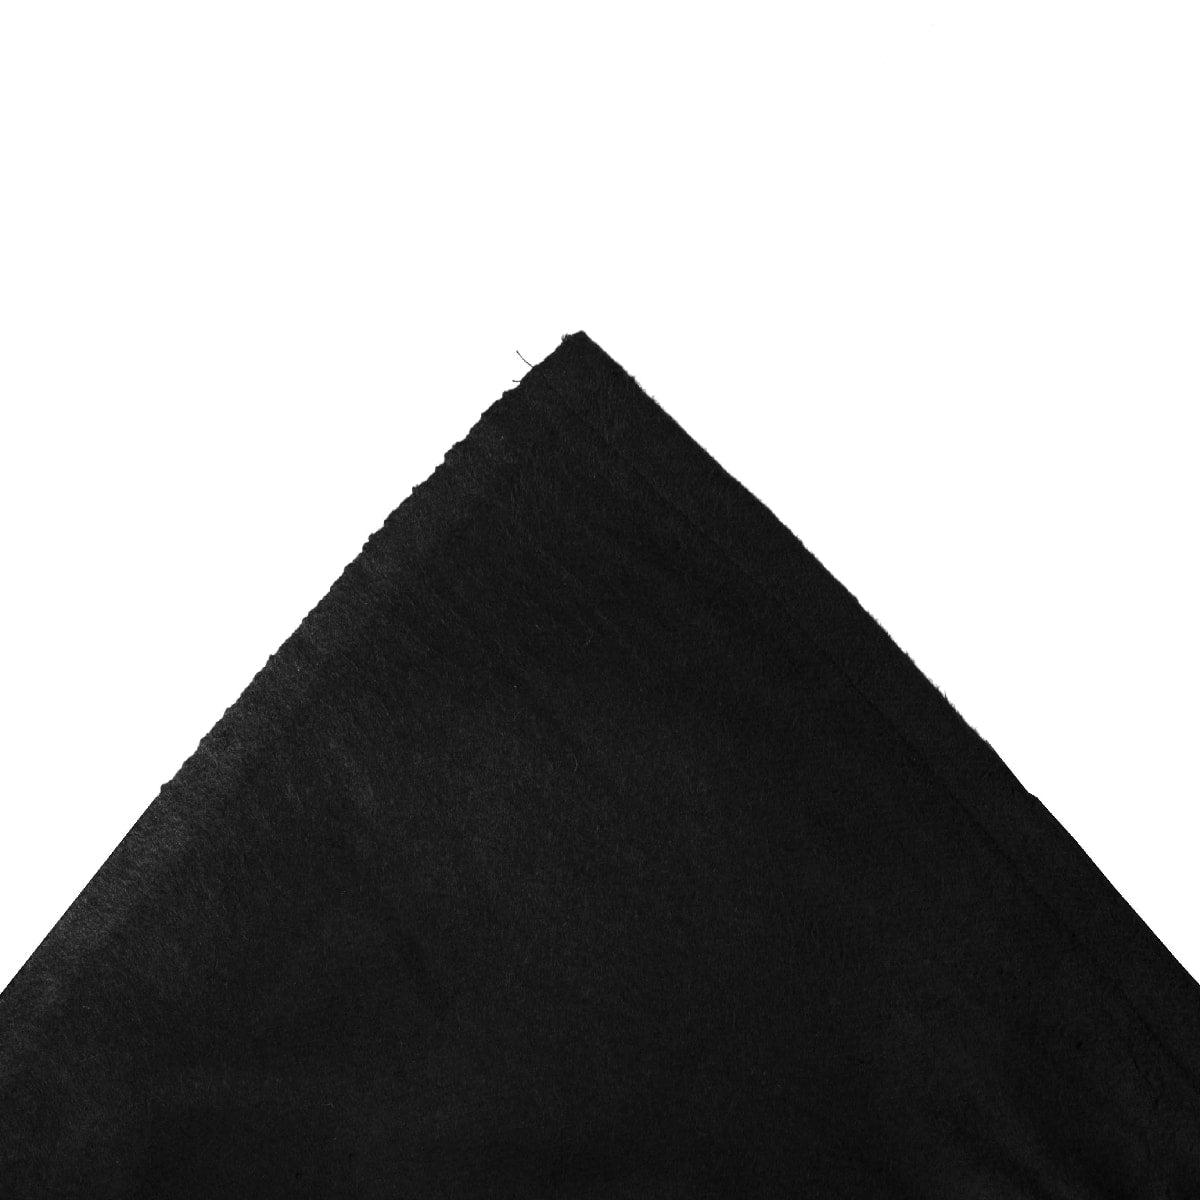 Black Material/Molton 600 x 600 cm / 20 x 20' (BACKGROUND)